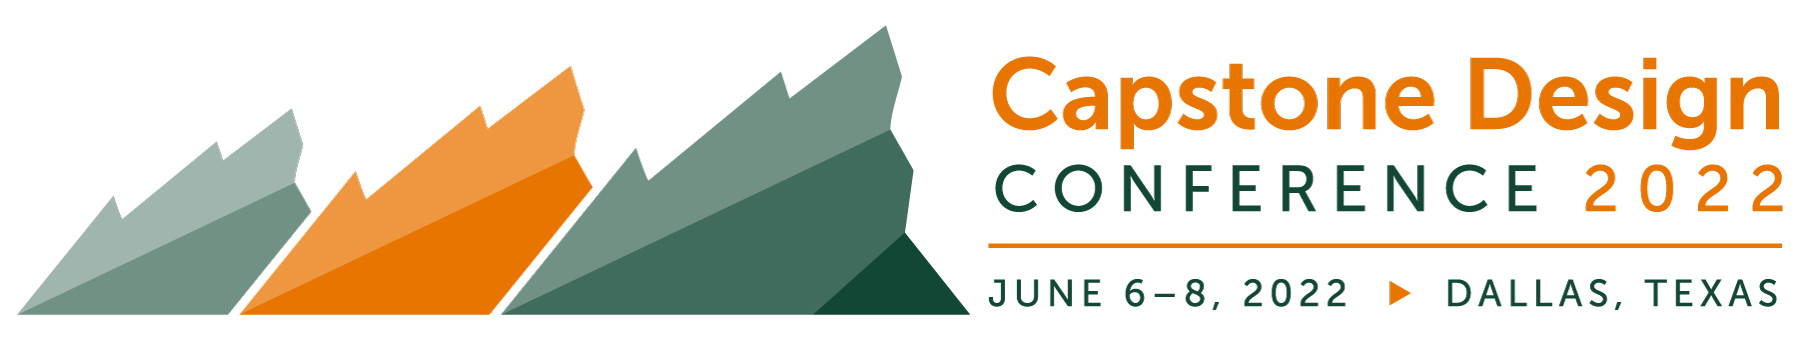 2022 Capstone Design Conference line logo